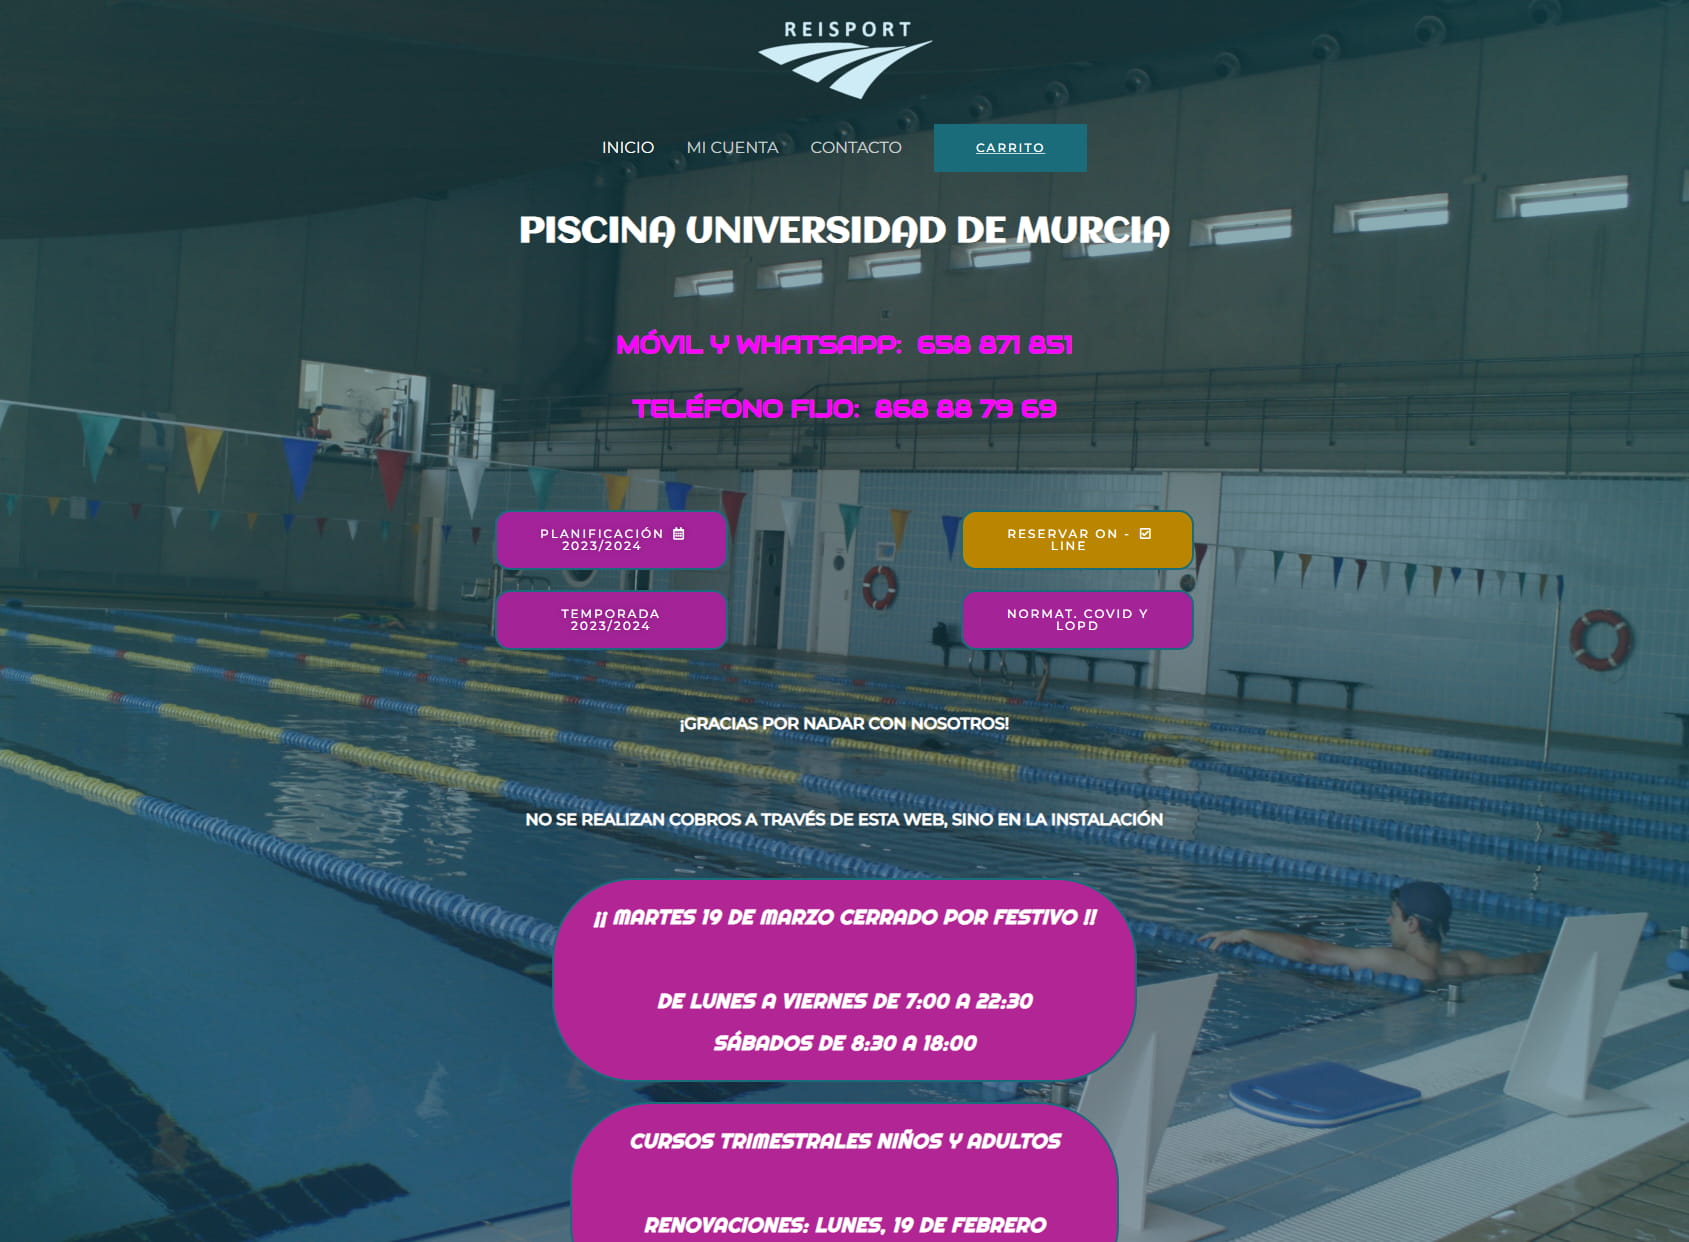 Murcia University Swimming Pool